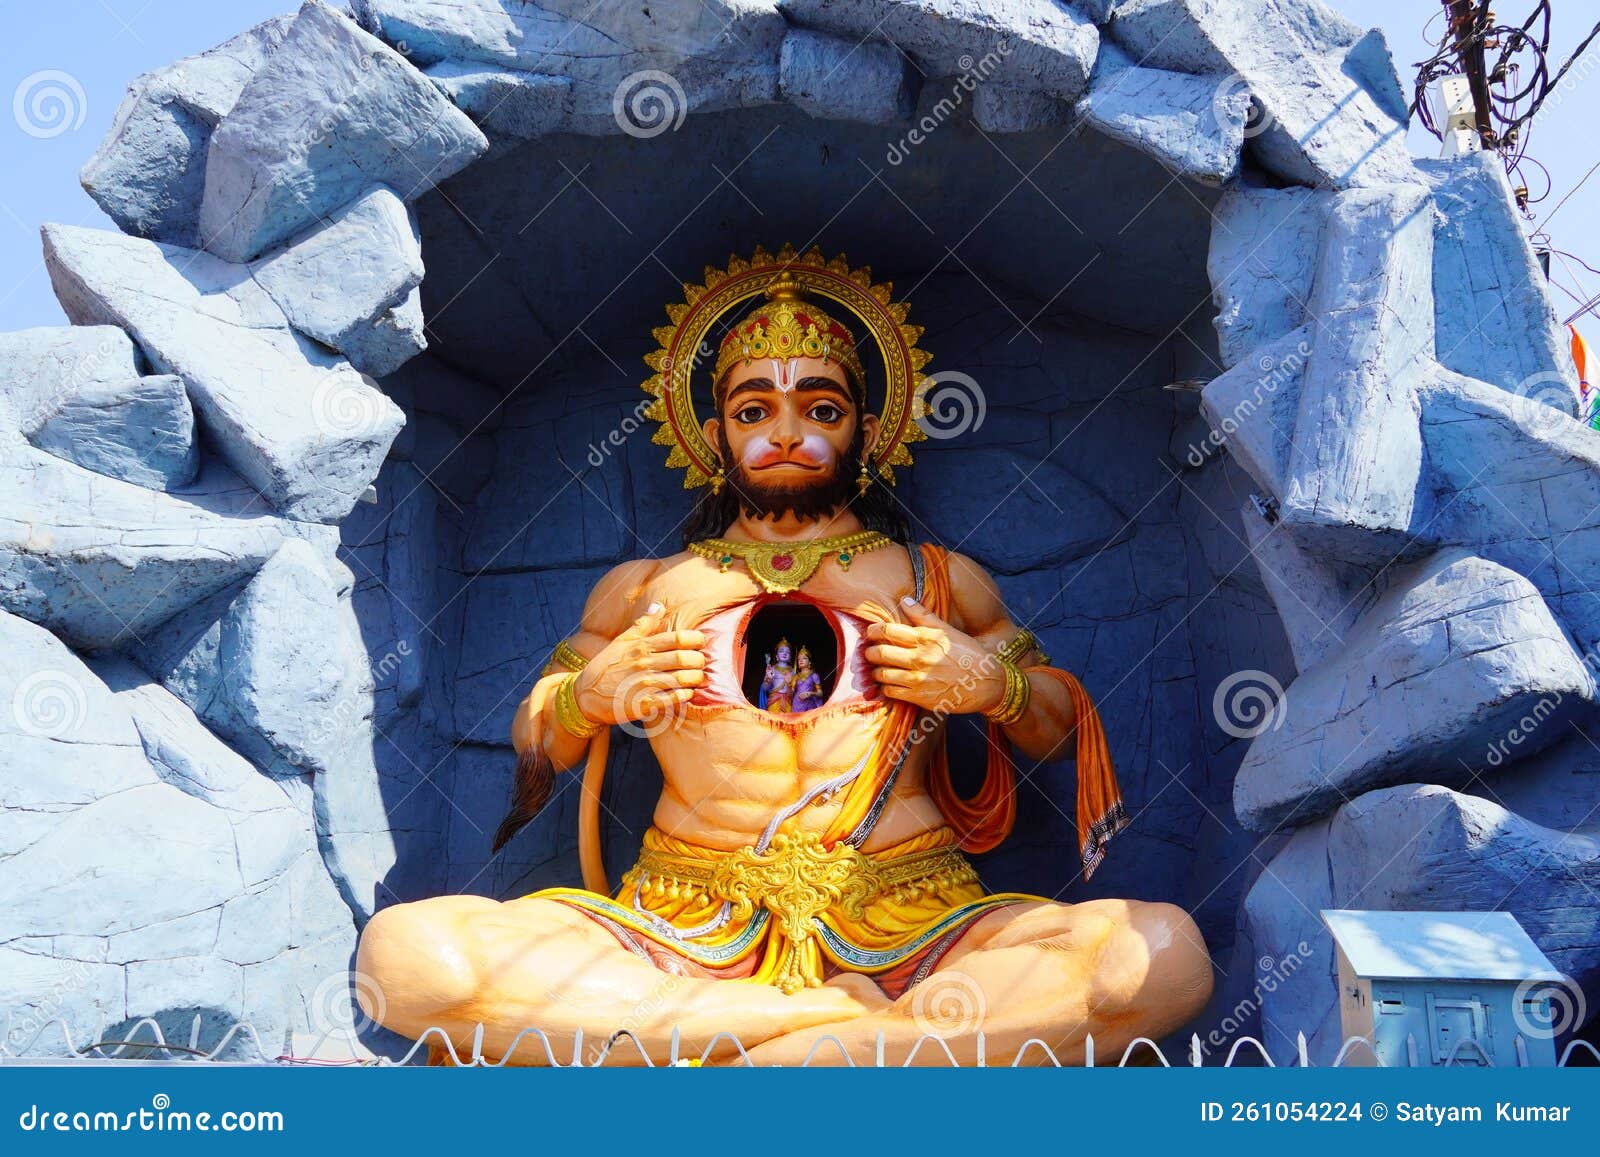 Hindu God Hanuman Images with Ram and Sita Stock Photo - Image of ...